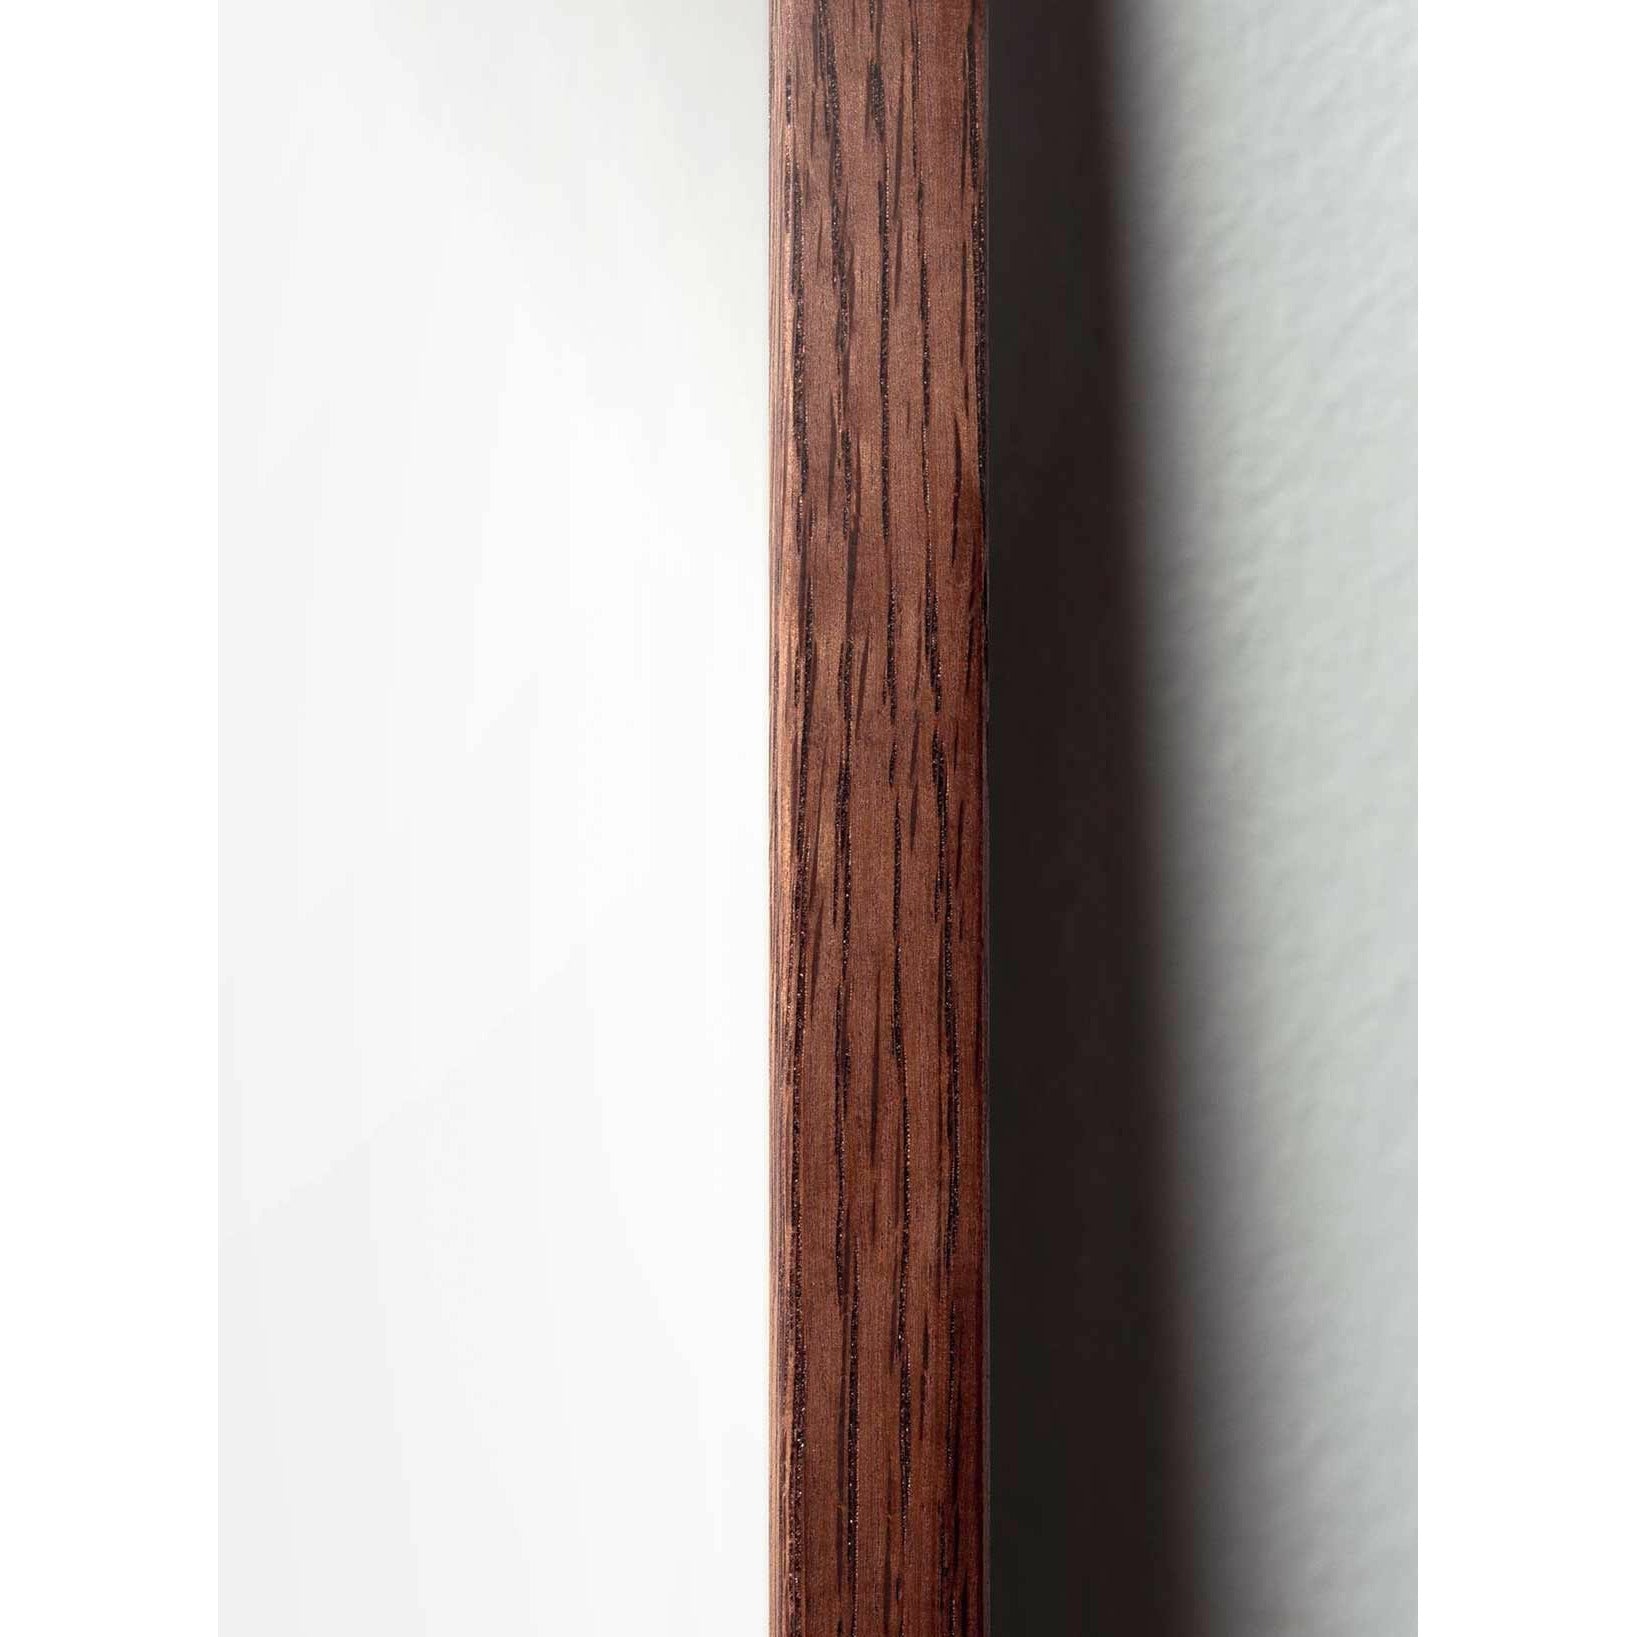 Póster de la línea de osito de peluche de creación, marco hecho de madera oscura de 30x40 cm, fondo azul